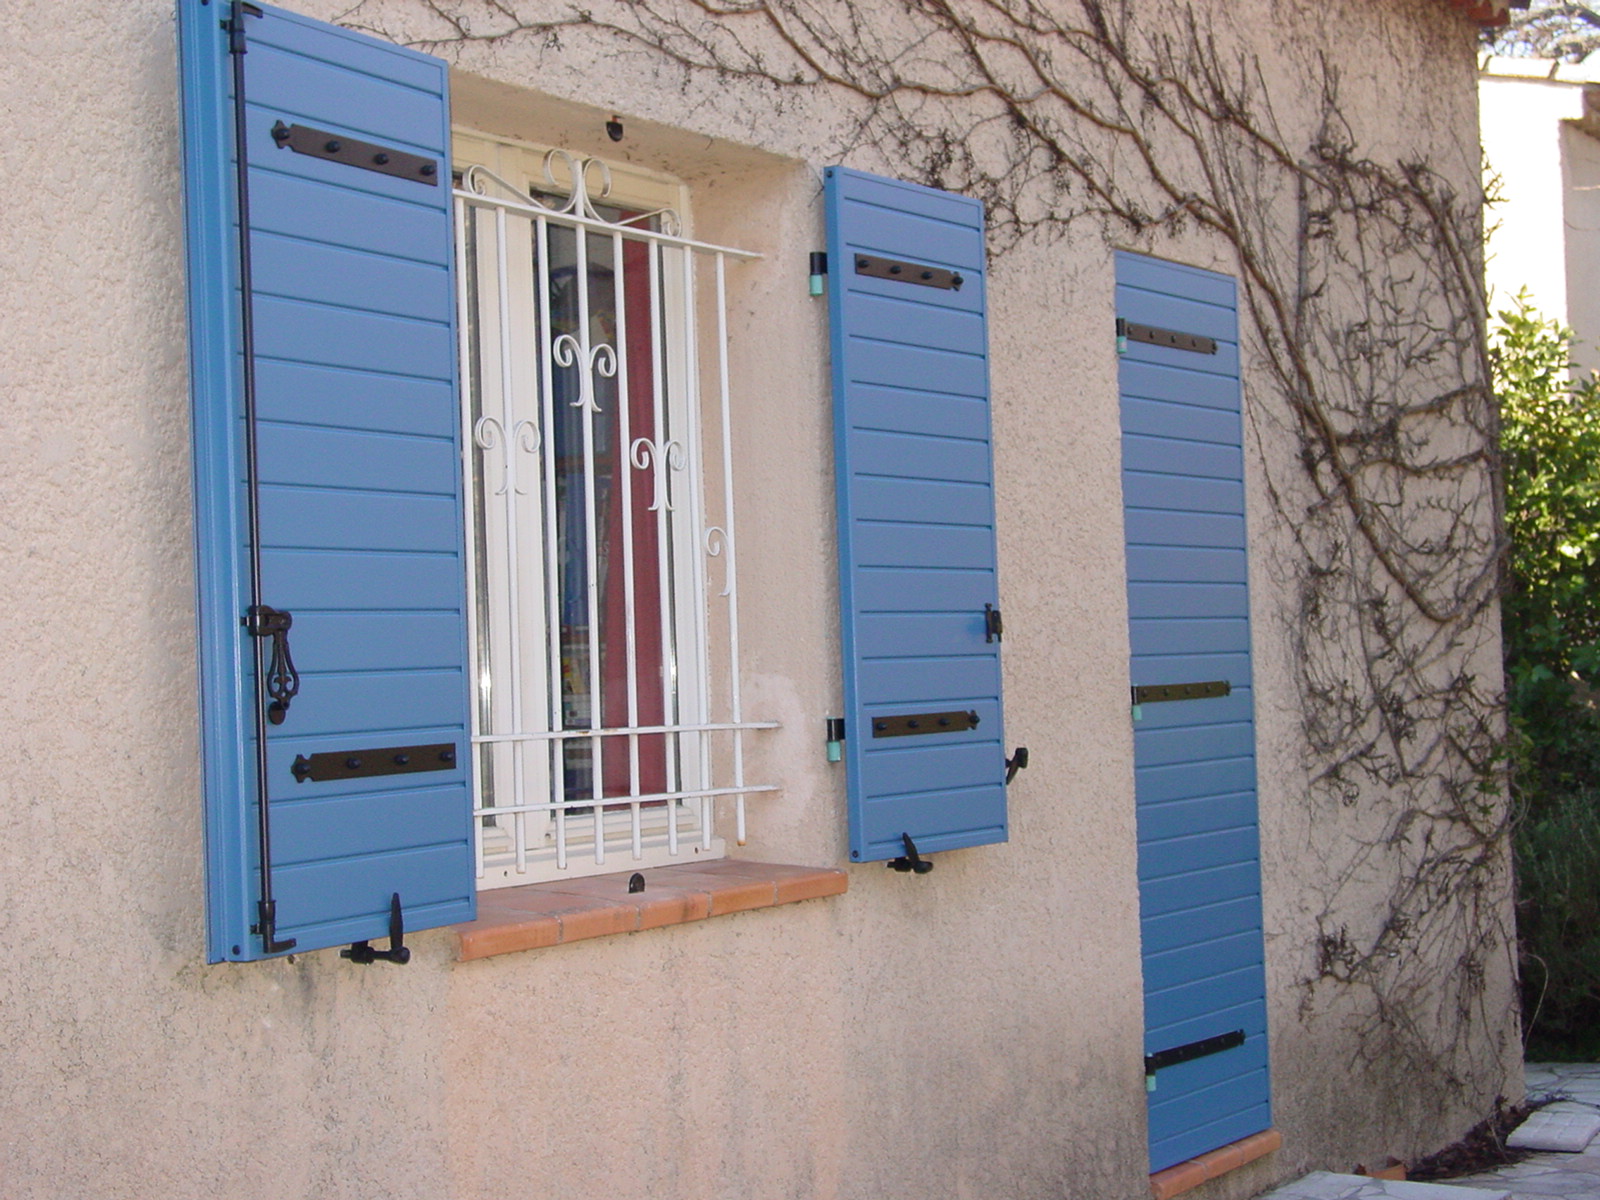  Volets battants manuels de fenêtres et portes fenêtres installés à Miramas